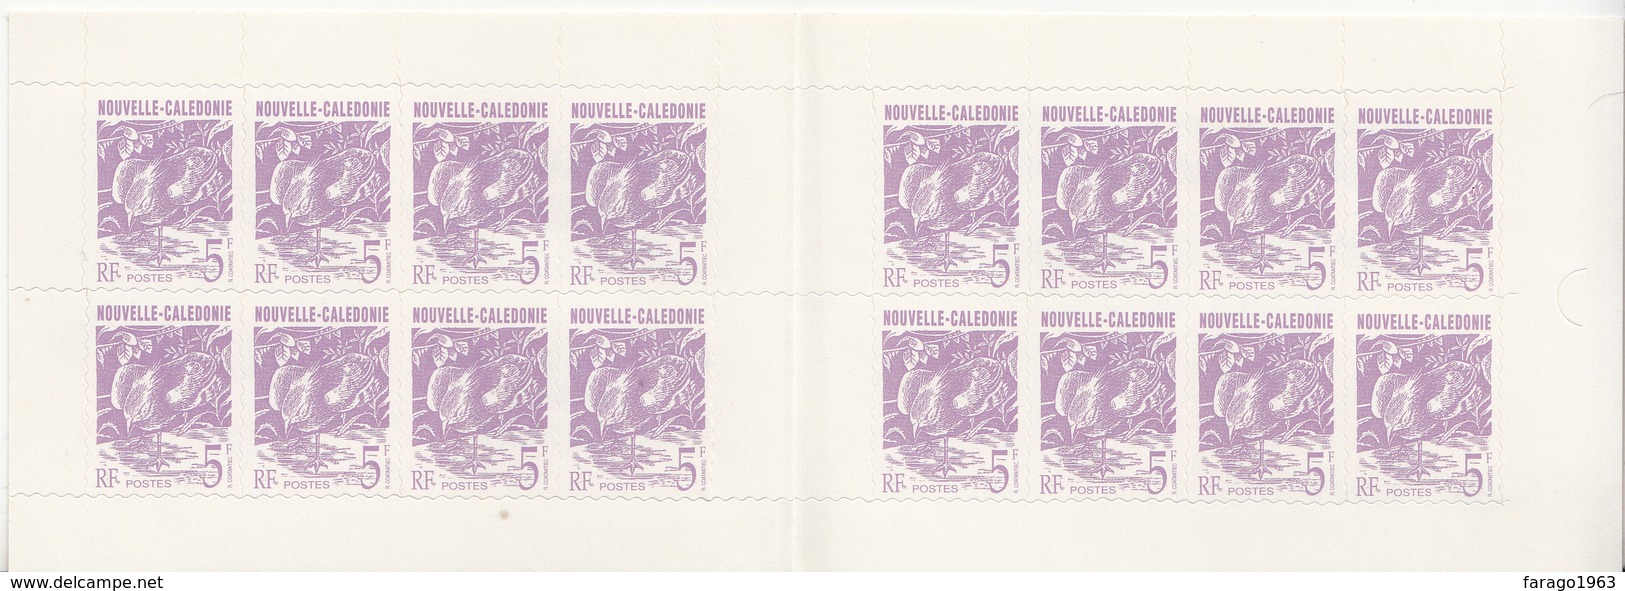 1993 1994 New Nouvelle Caledonia 5 Fr Kagu Bird  Booklet Carnet  MNH - Booklets